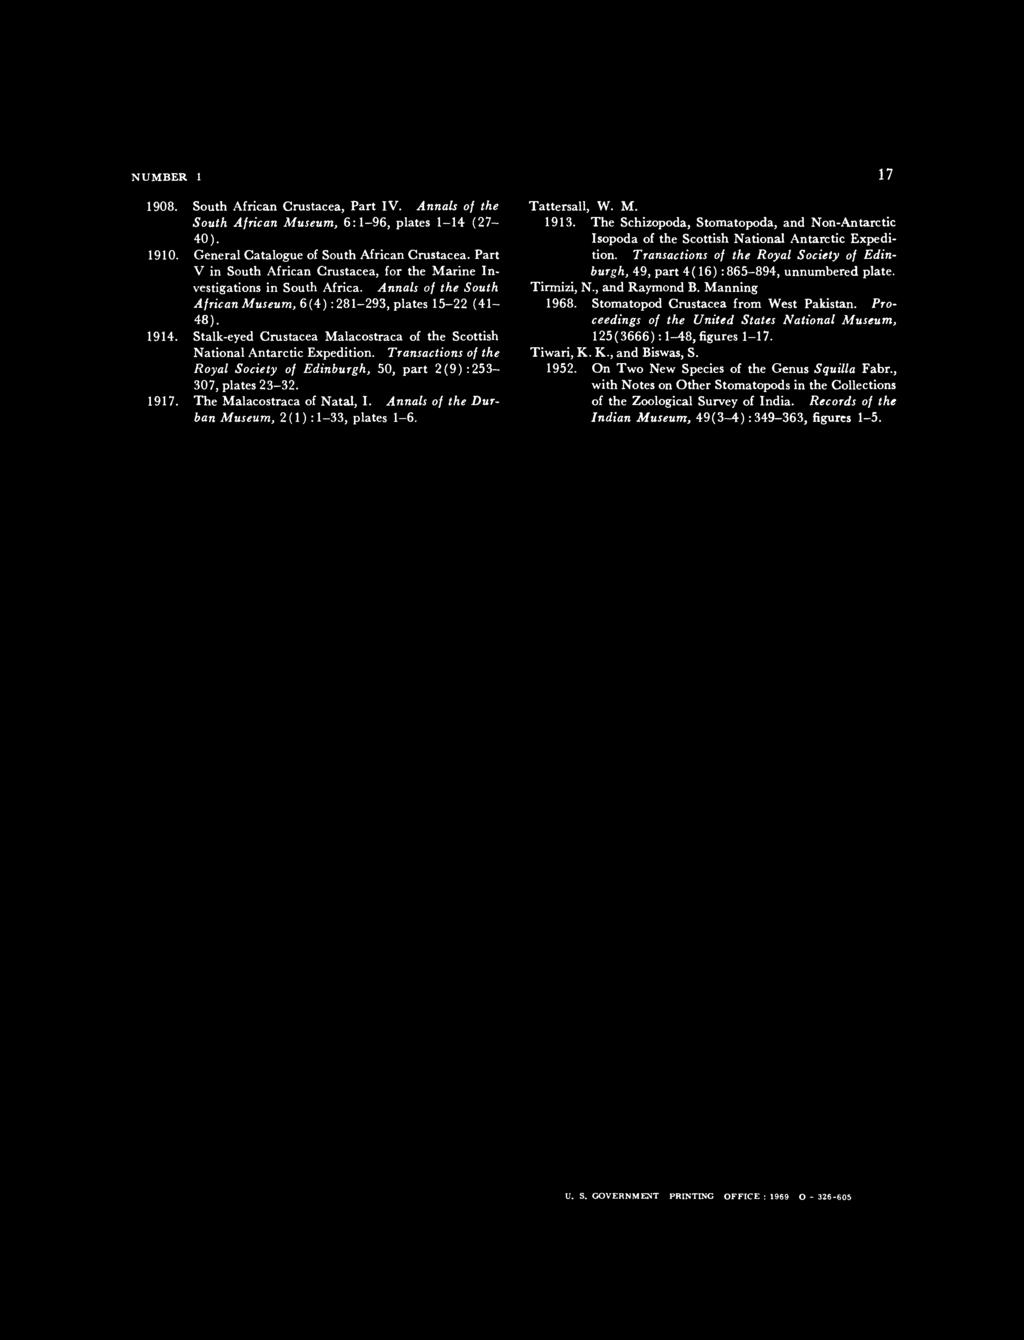 Stalk-eyed Crustacea Malacostraca of the Scottish National Antarctic Expedition. Transactions of the Royal Society of Edinburgh, 5, part (9):53-37, plates 3-3. 97. The Malacostraca of Natal, I.